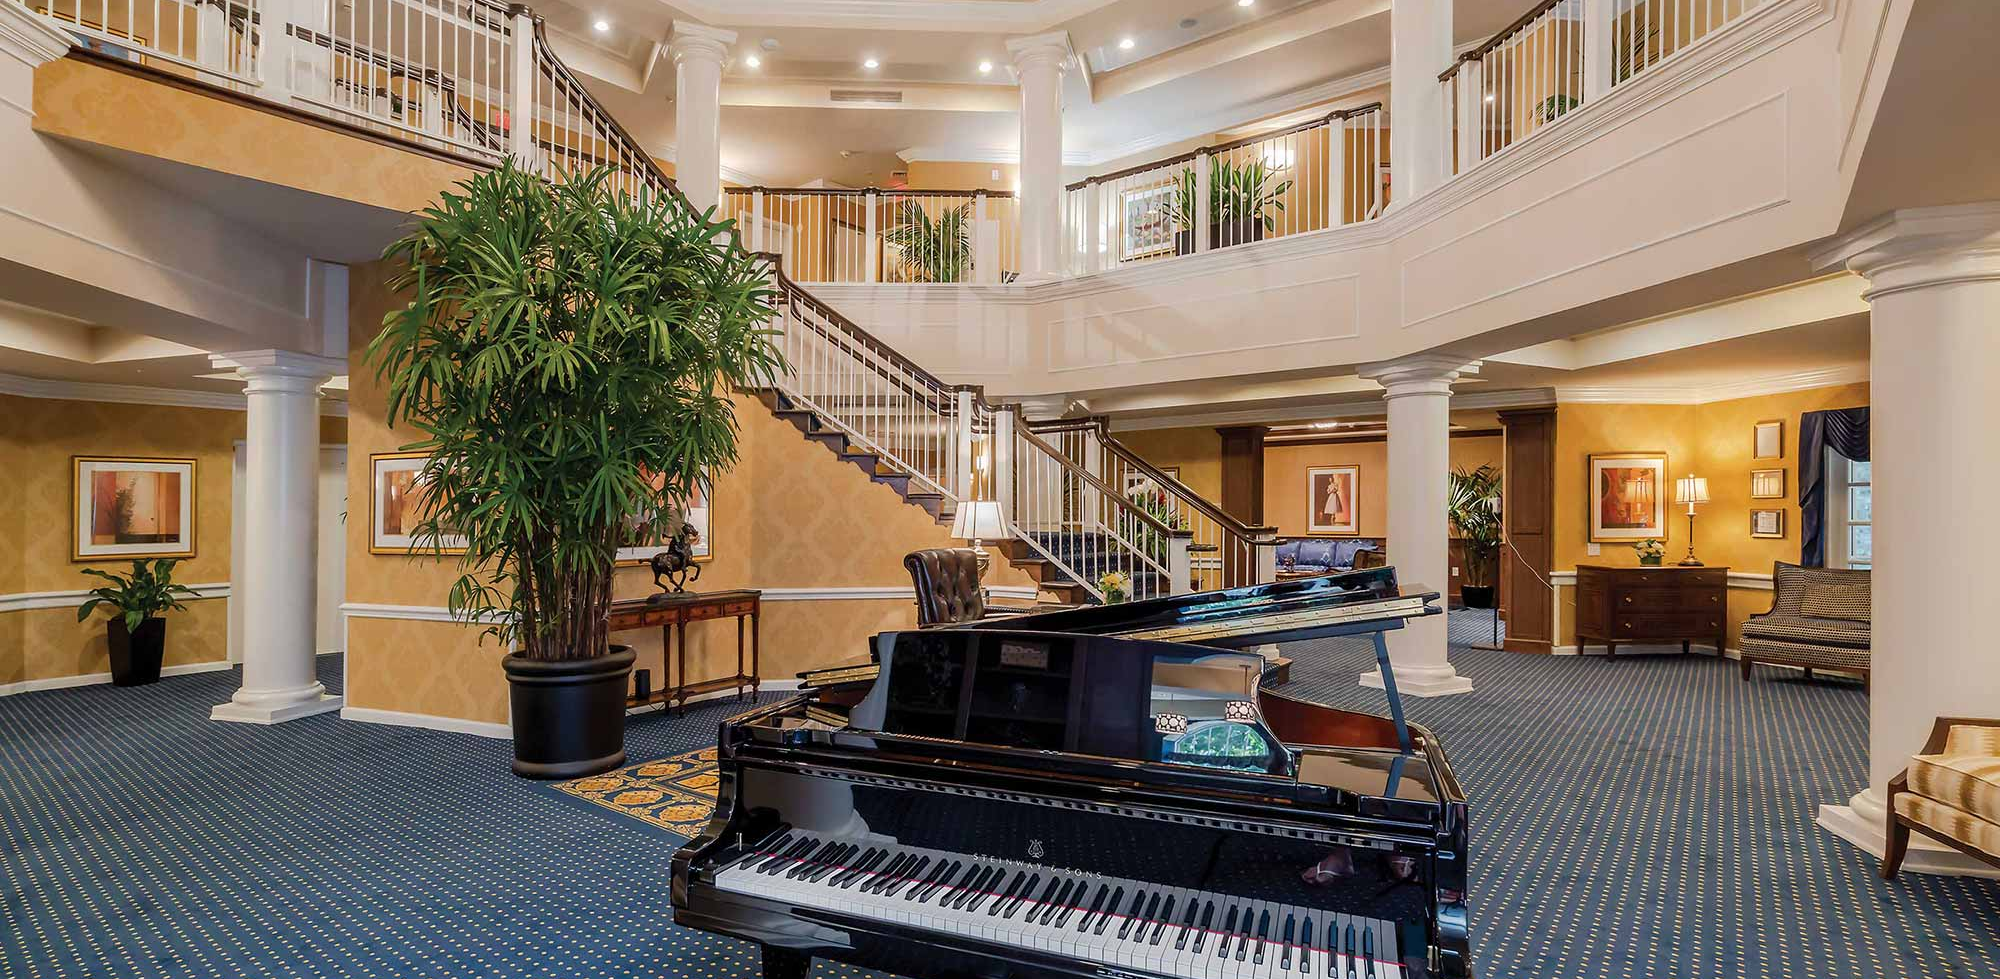 Serenade Princeton piano lobby